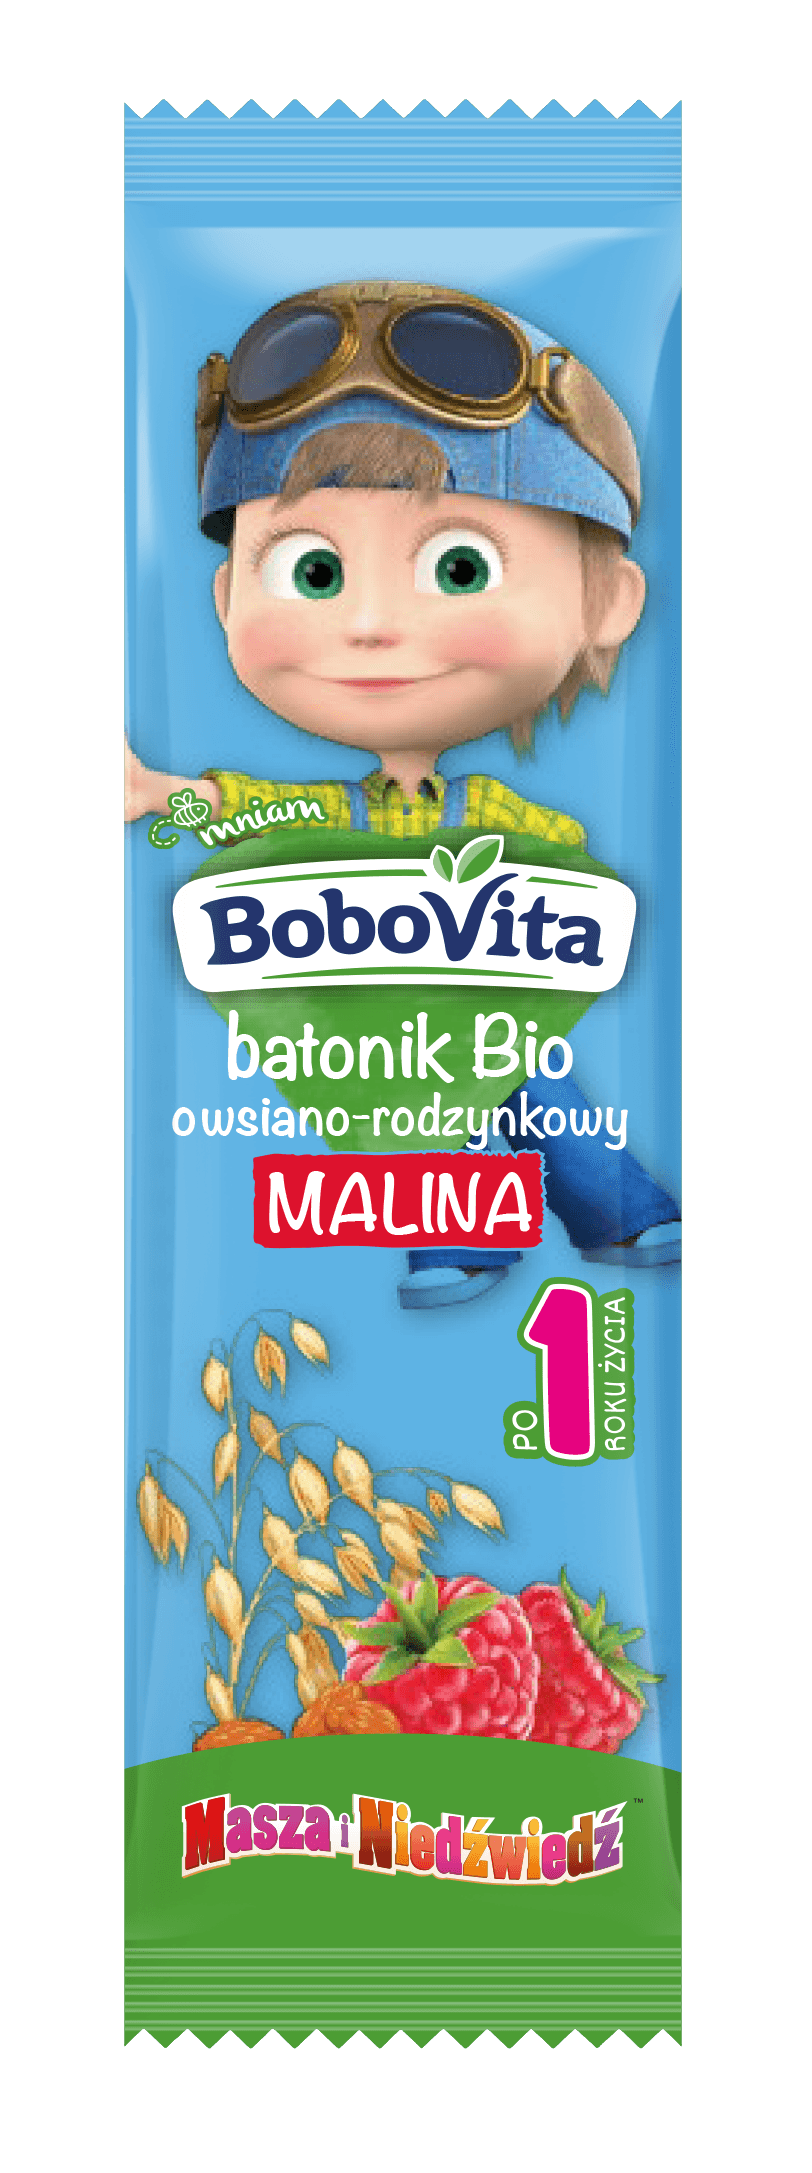 https://bobovita-media-dep.s3.amazonaws.com/media/original_images/5900852048937_batonik_bio_malina.png